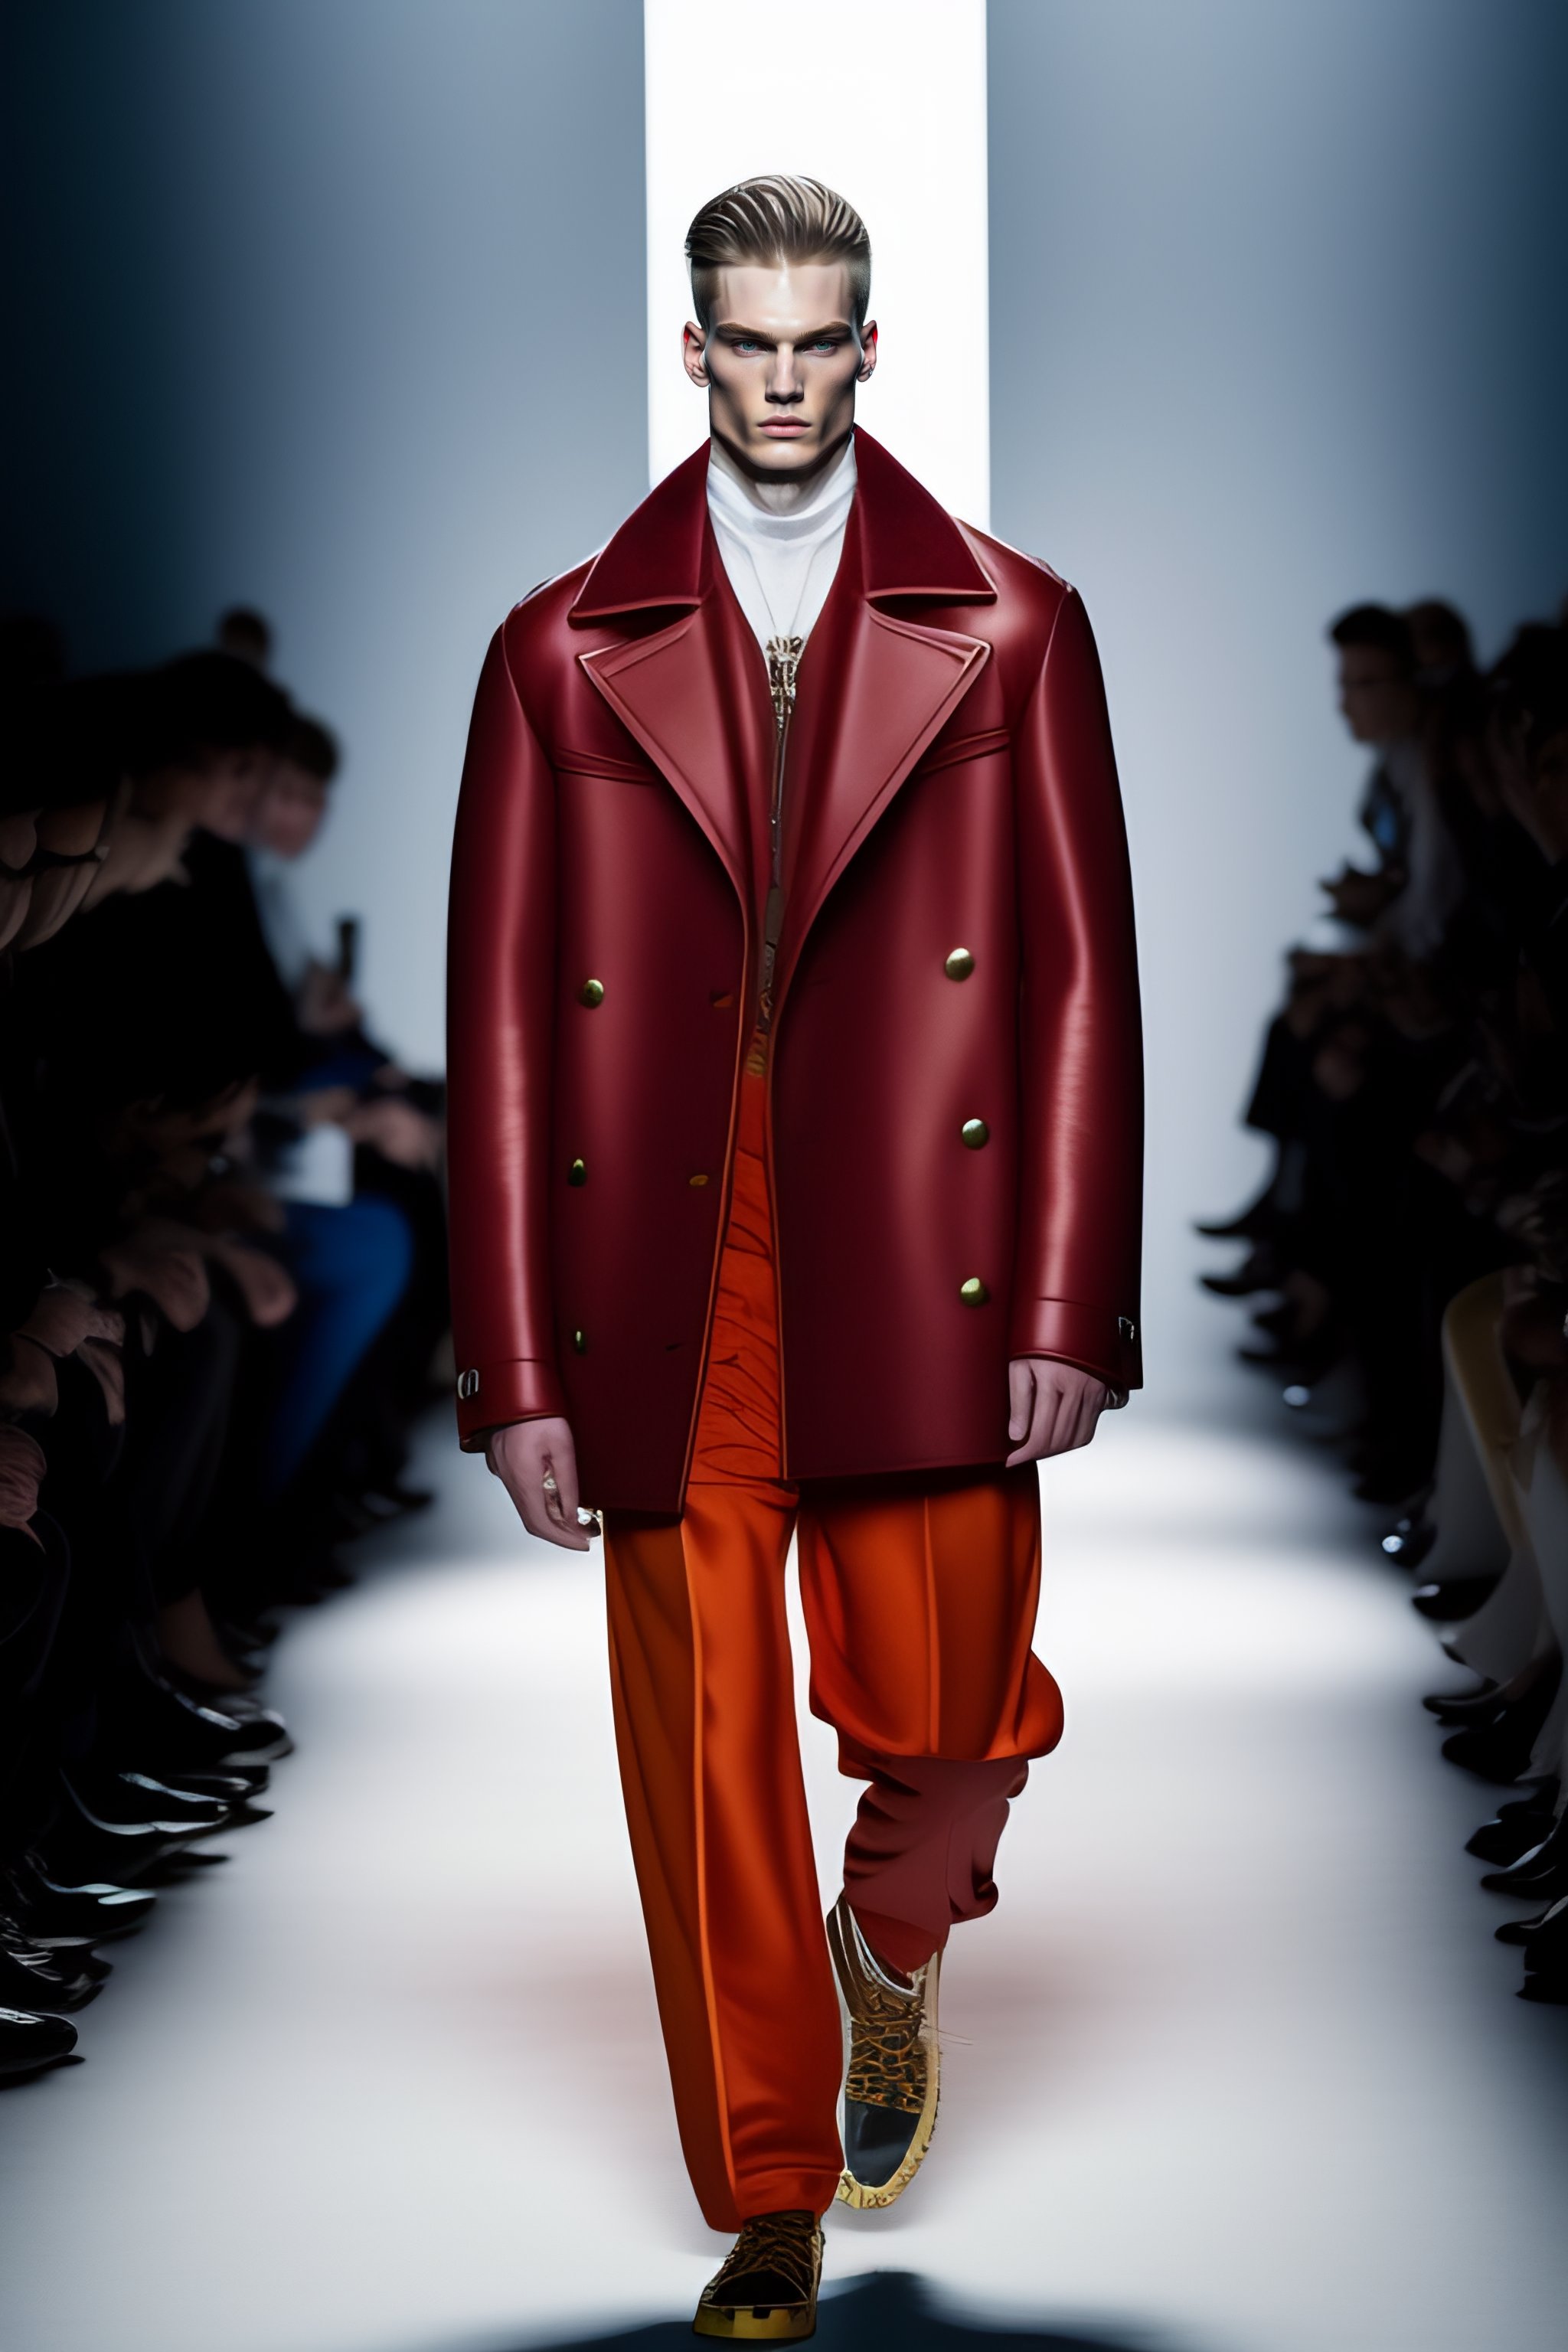 Lexica - Male model walking dow the catwalk, fashion, louis vuitton